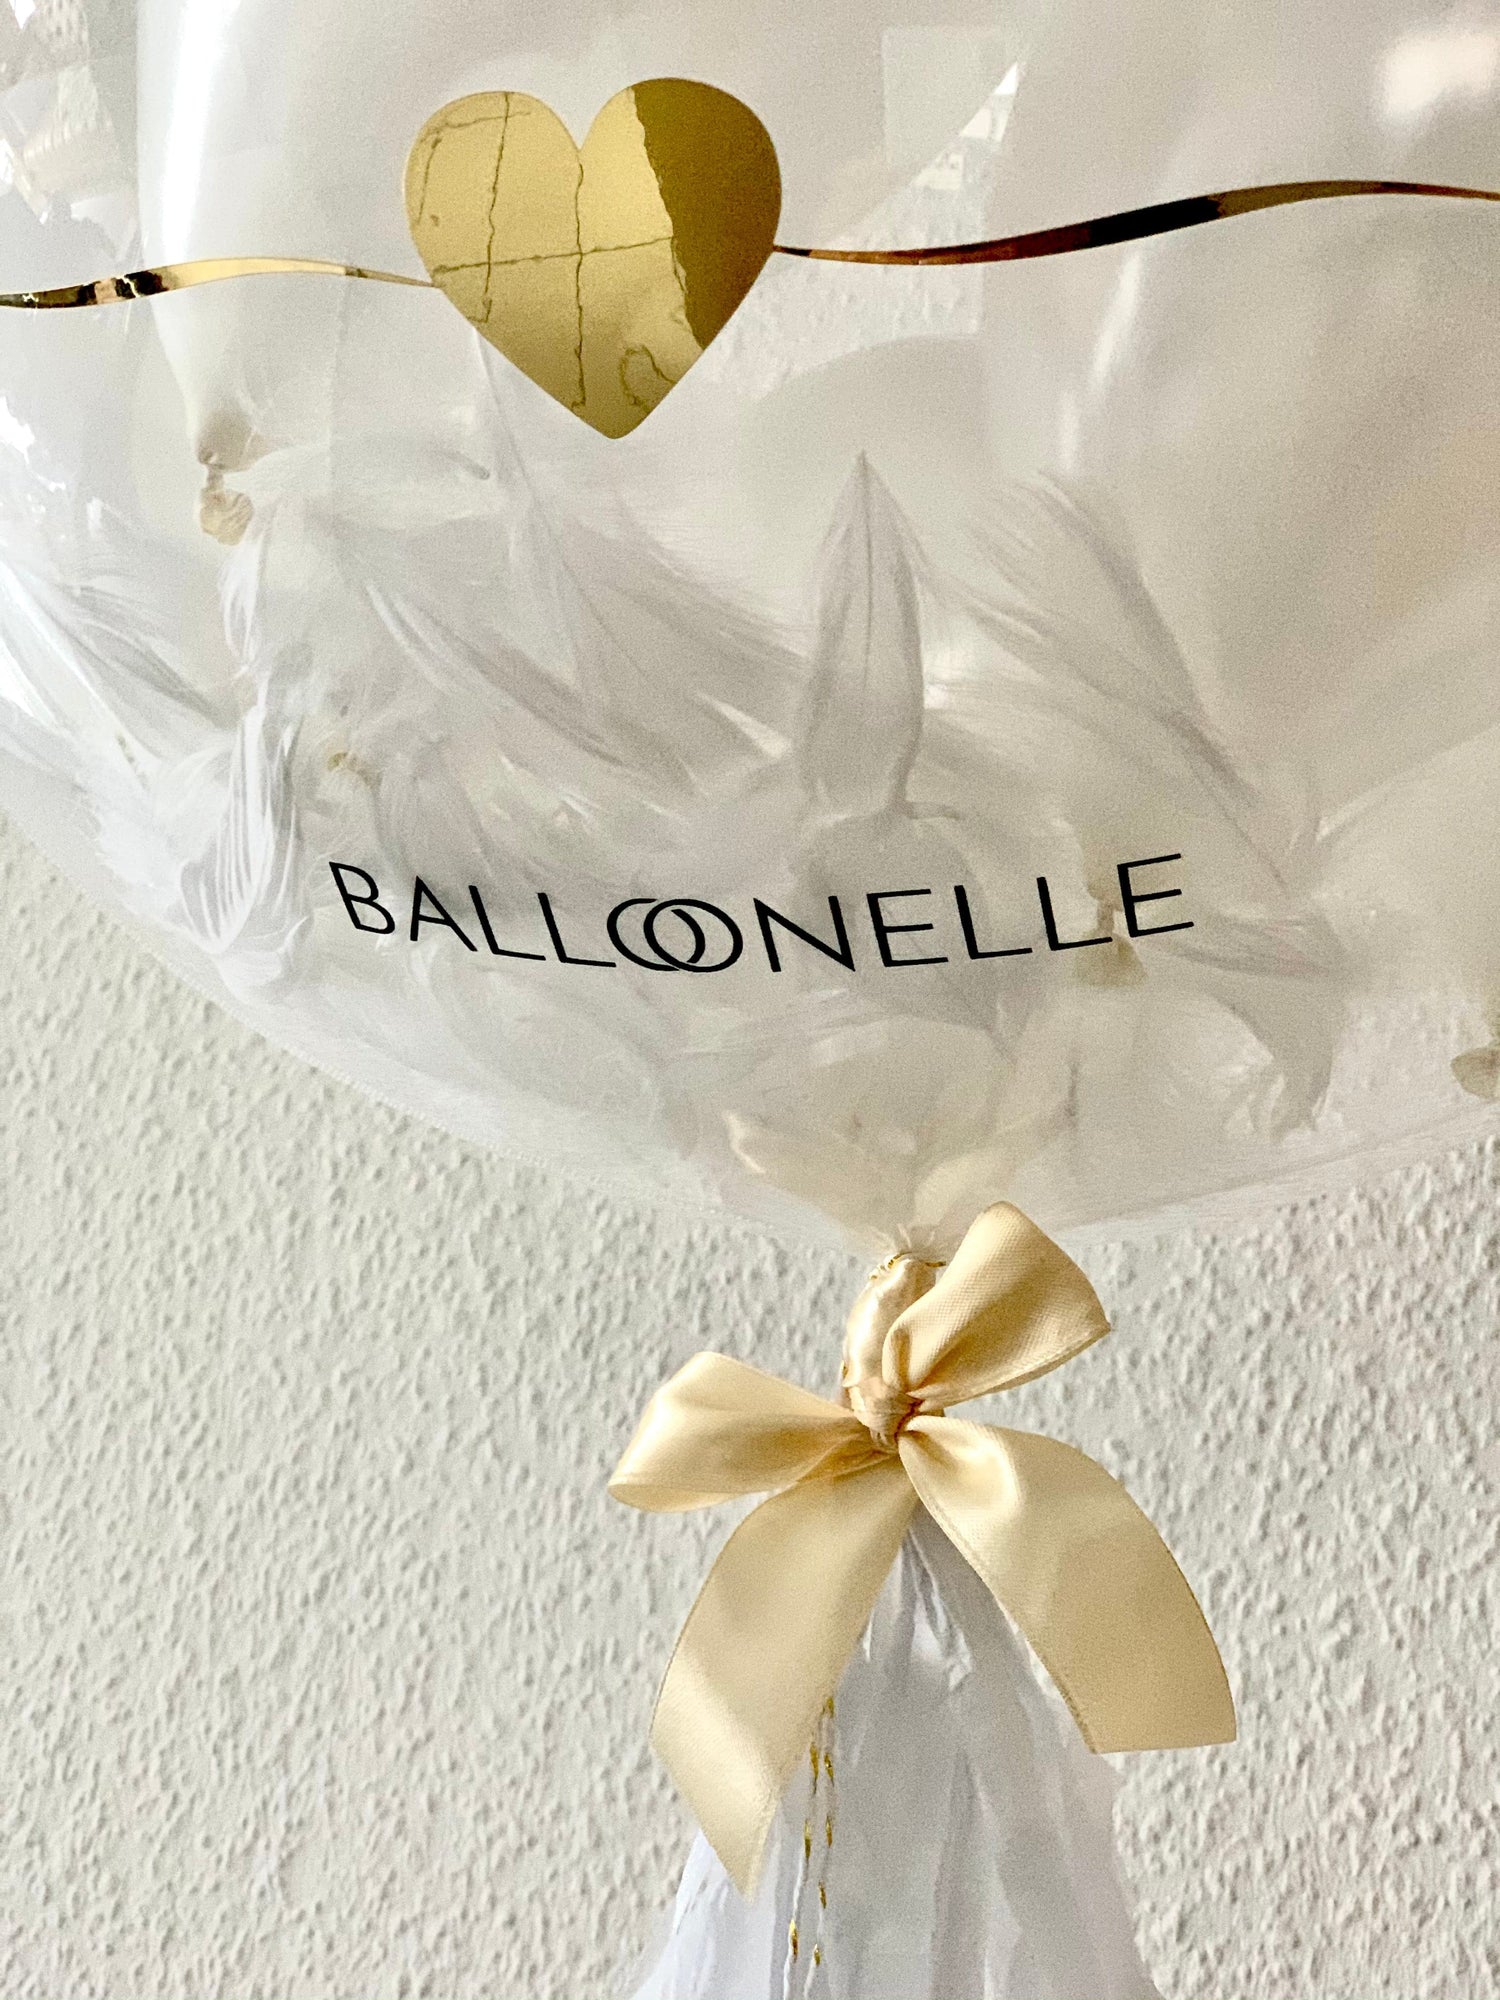 Snow White Designer Ballon - BALLOONELLE